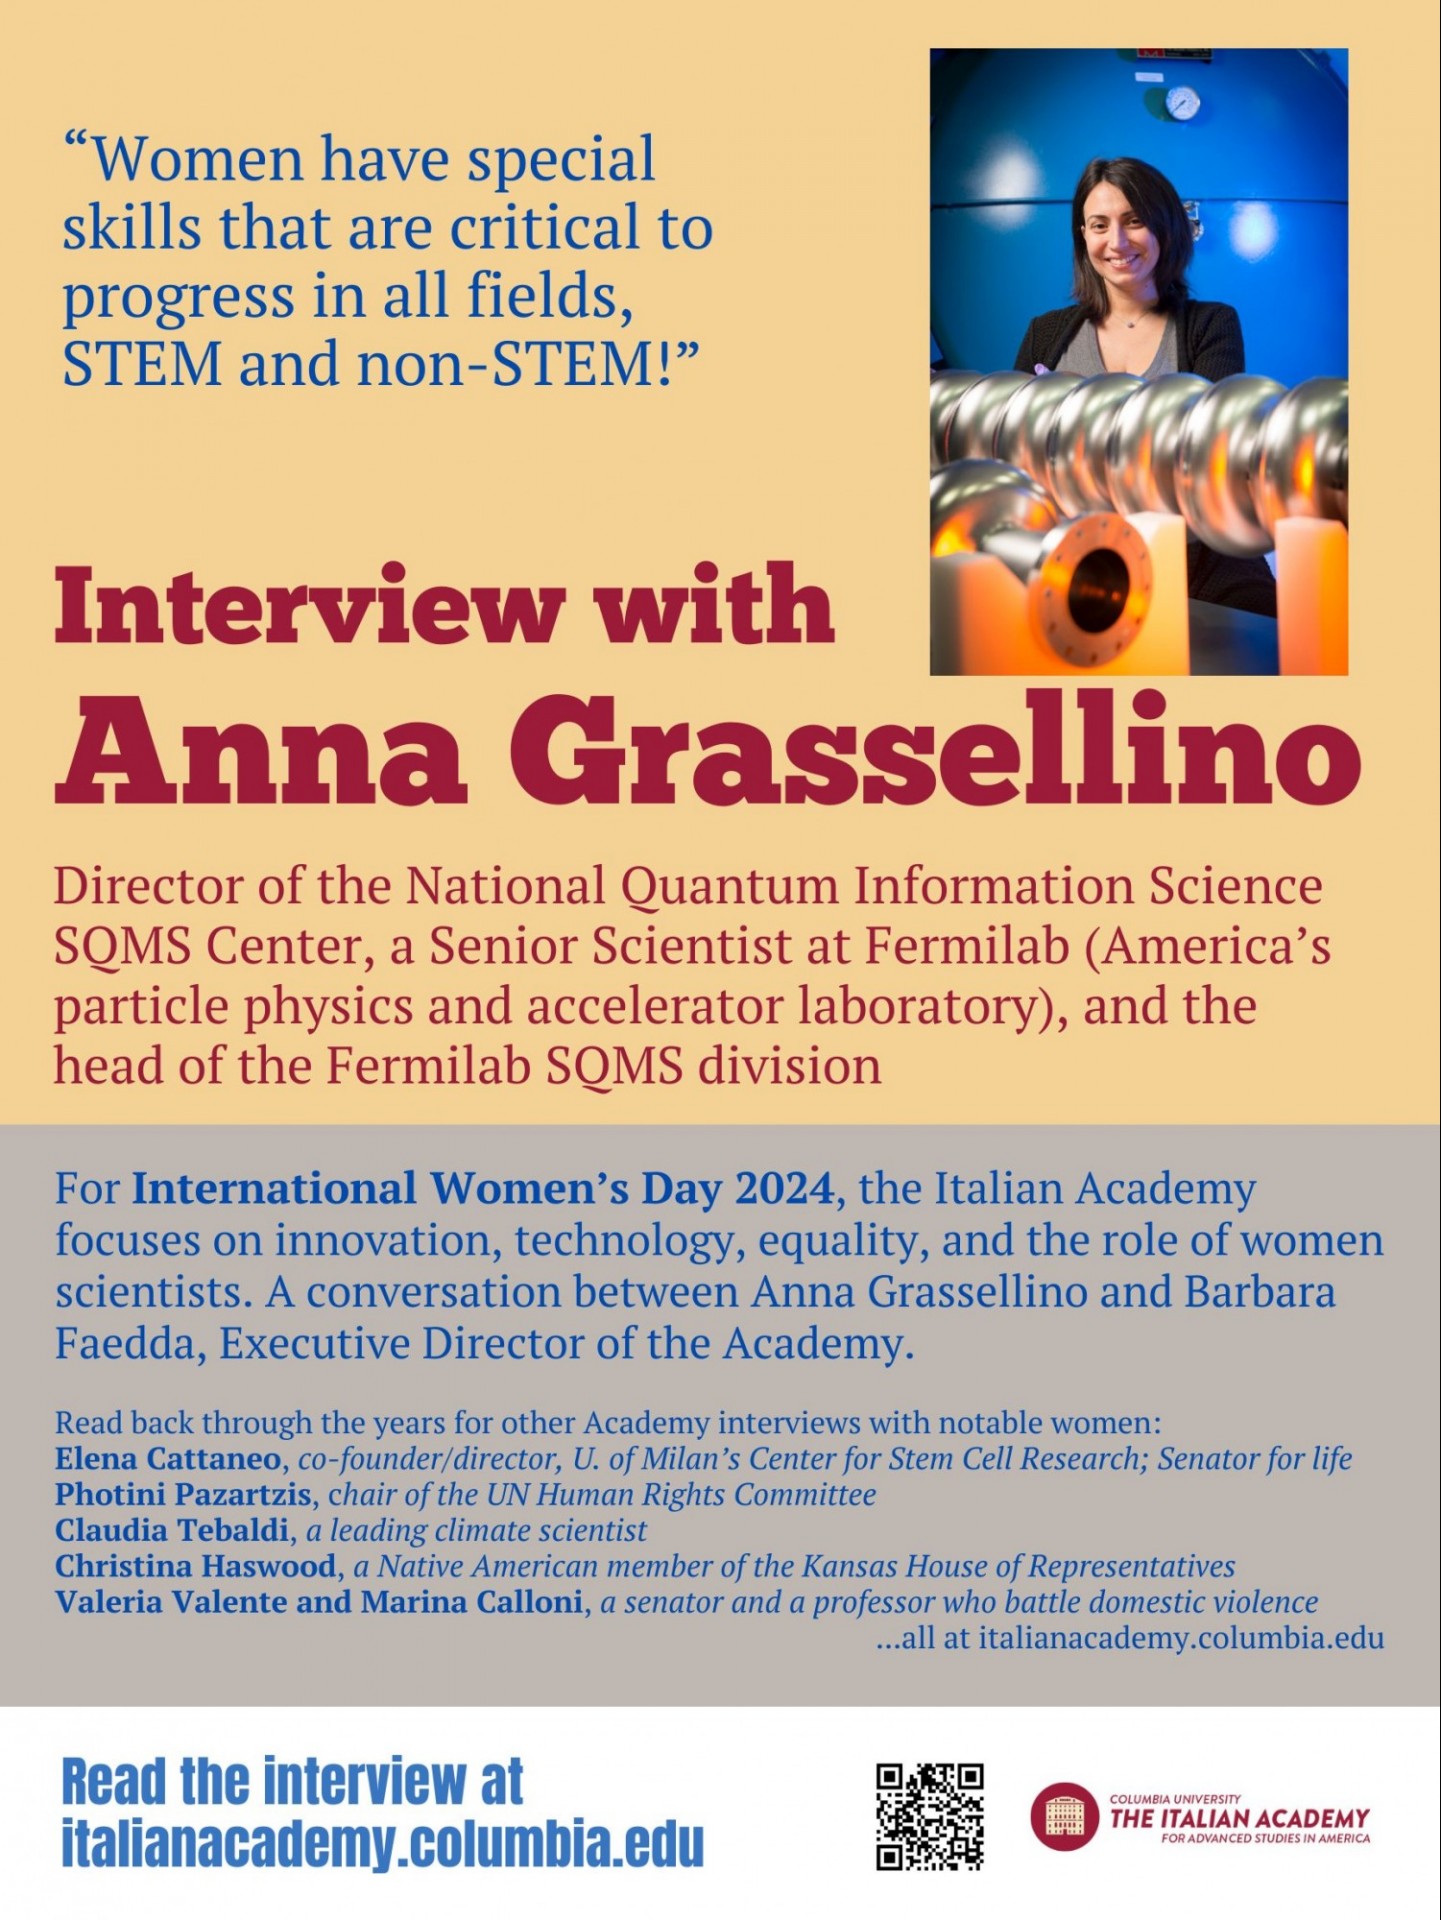 International Women’s Day 2024 — Interview with Anna Grassellino Poster
